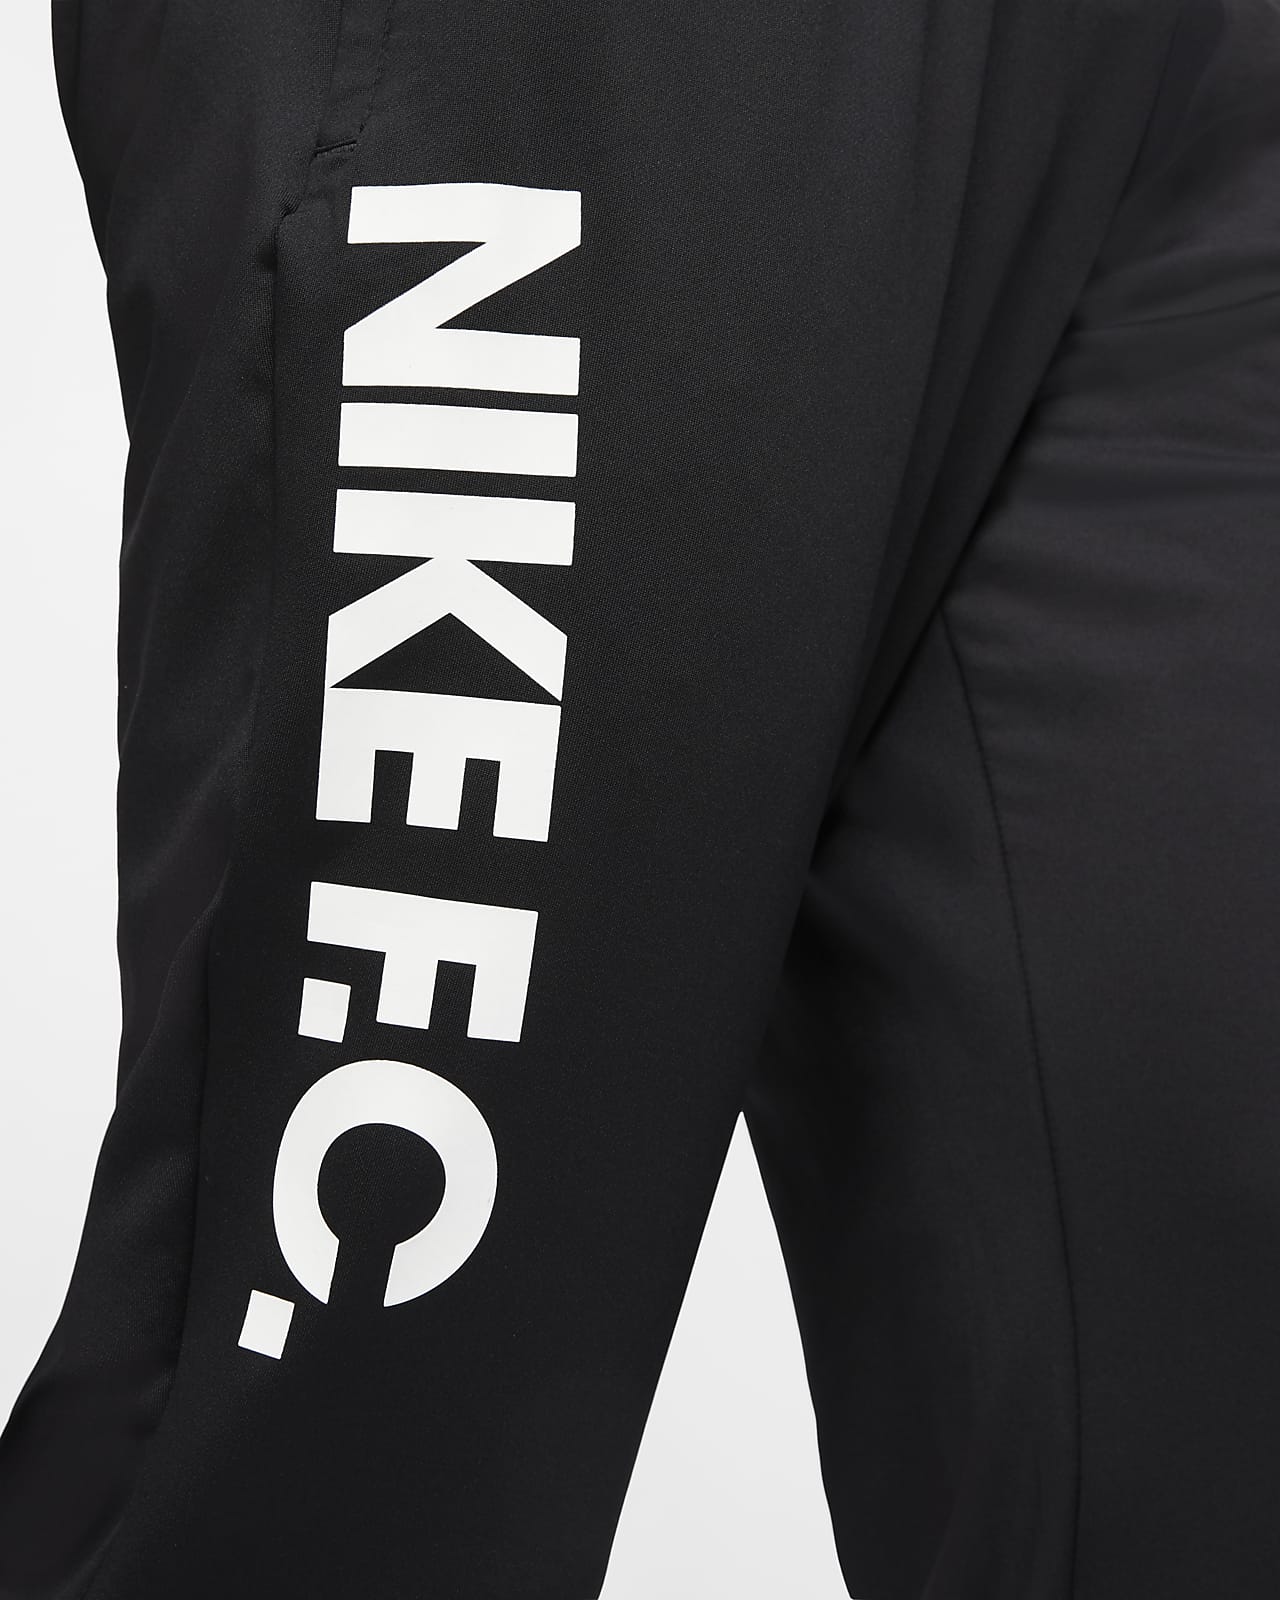 Nike F.C. Essential Soccer Pants 010/Black-Grey